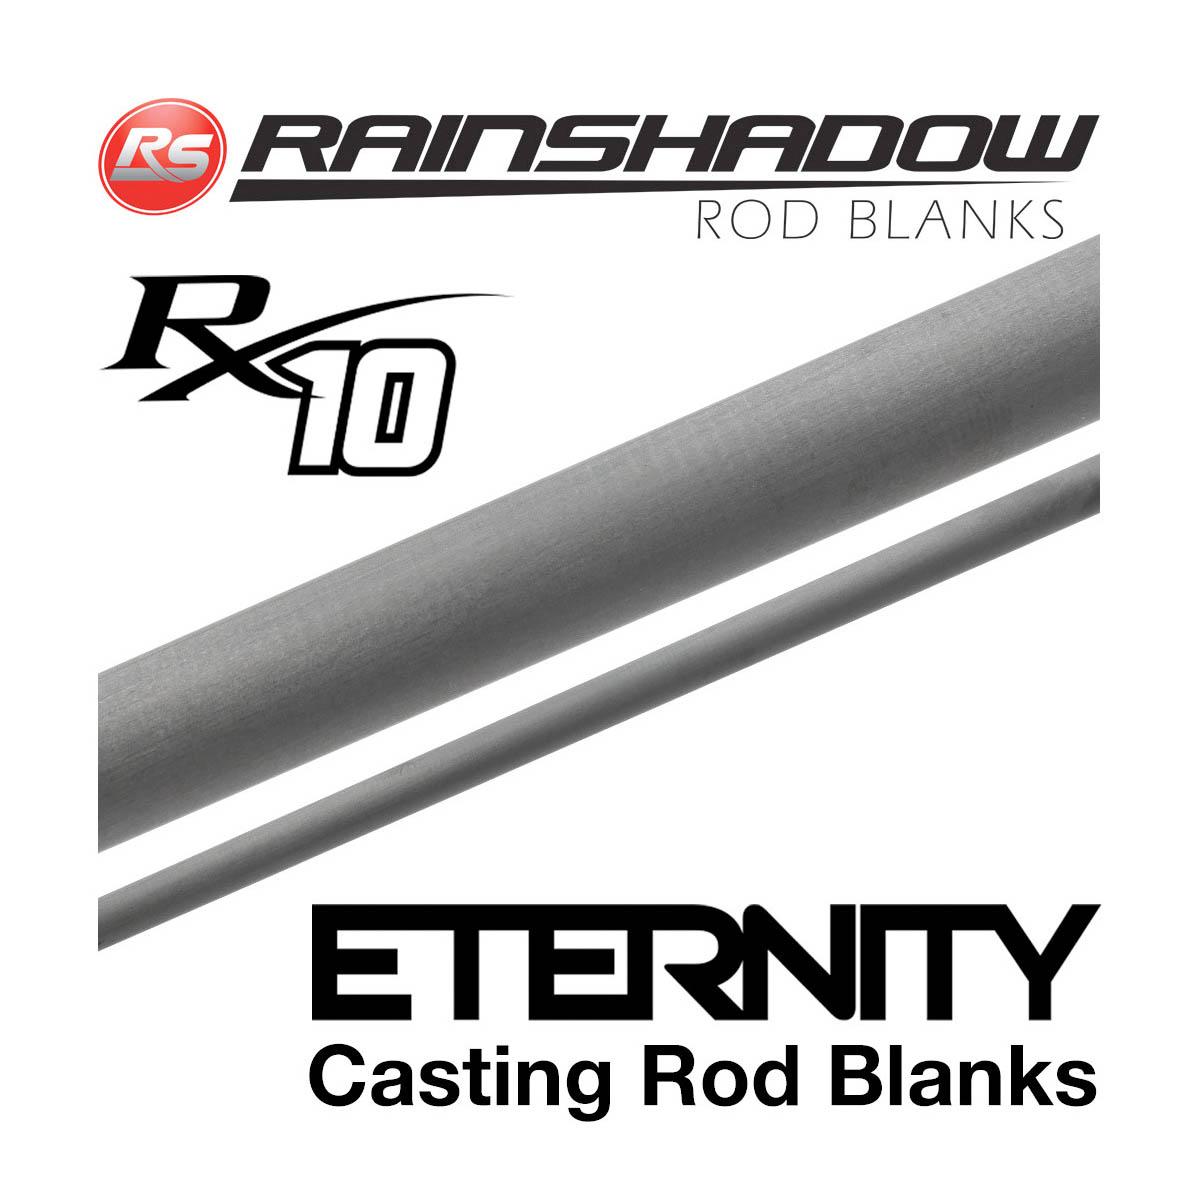 Rainshadow Eternity RX10 Casting Rod Blanks